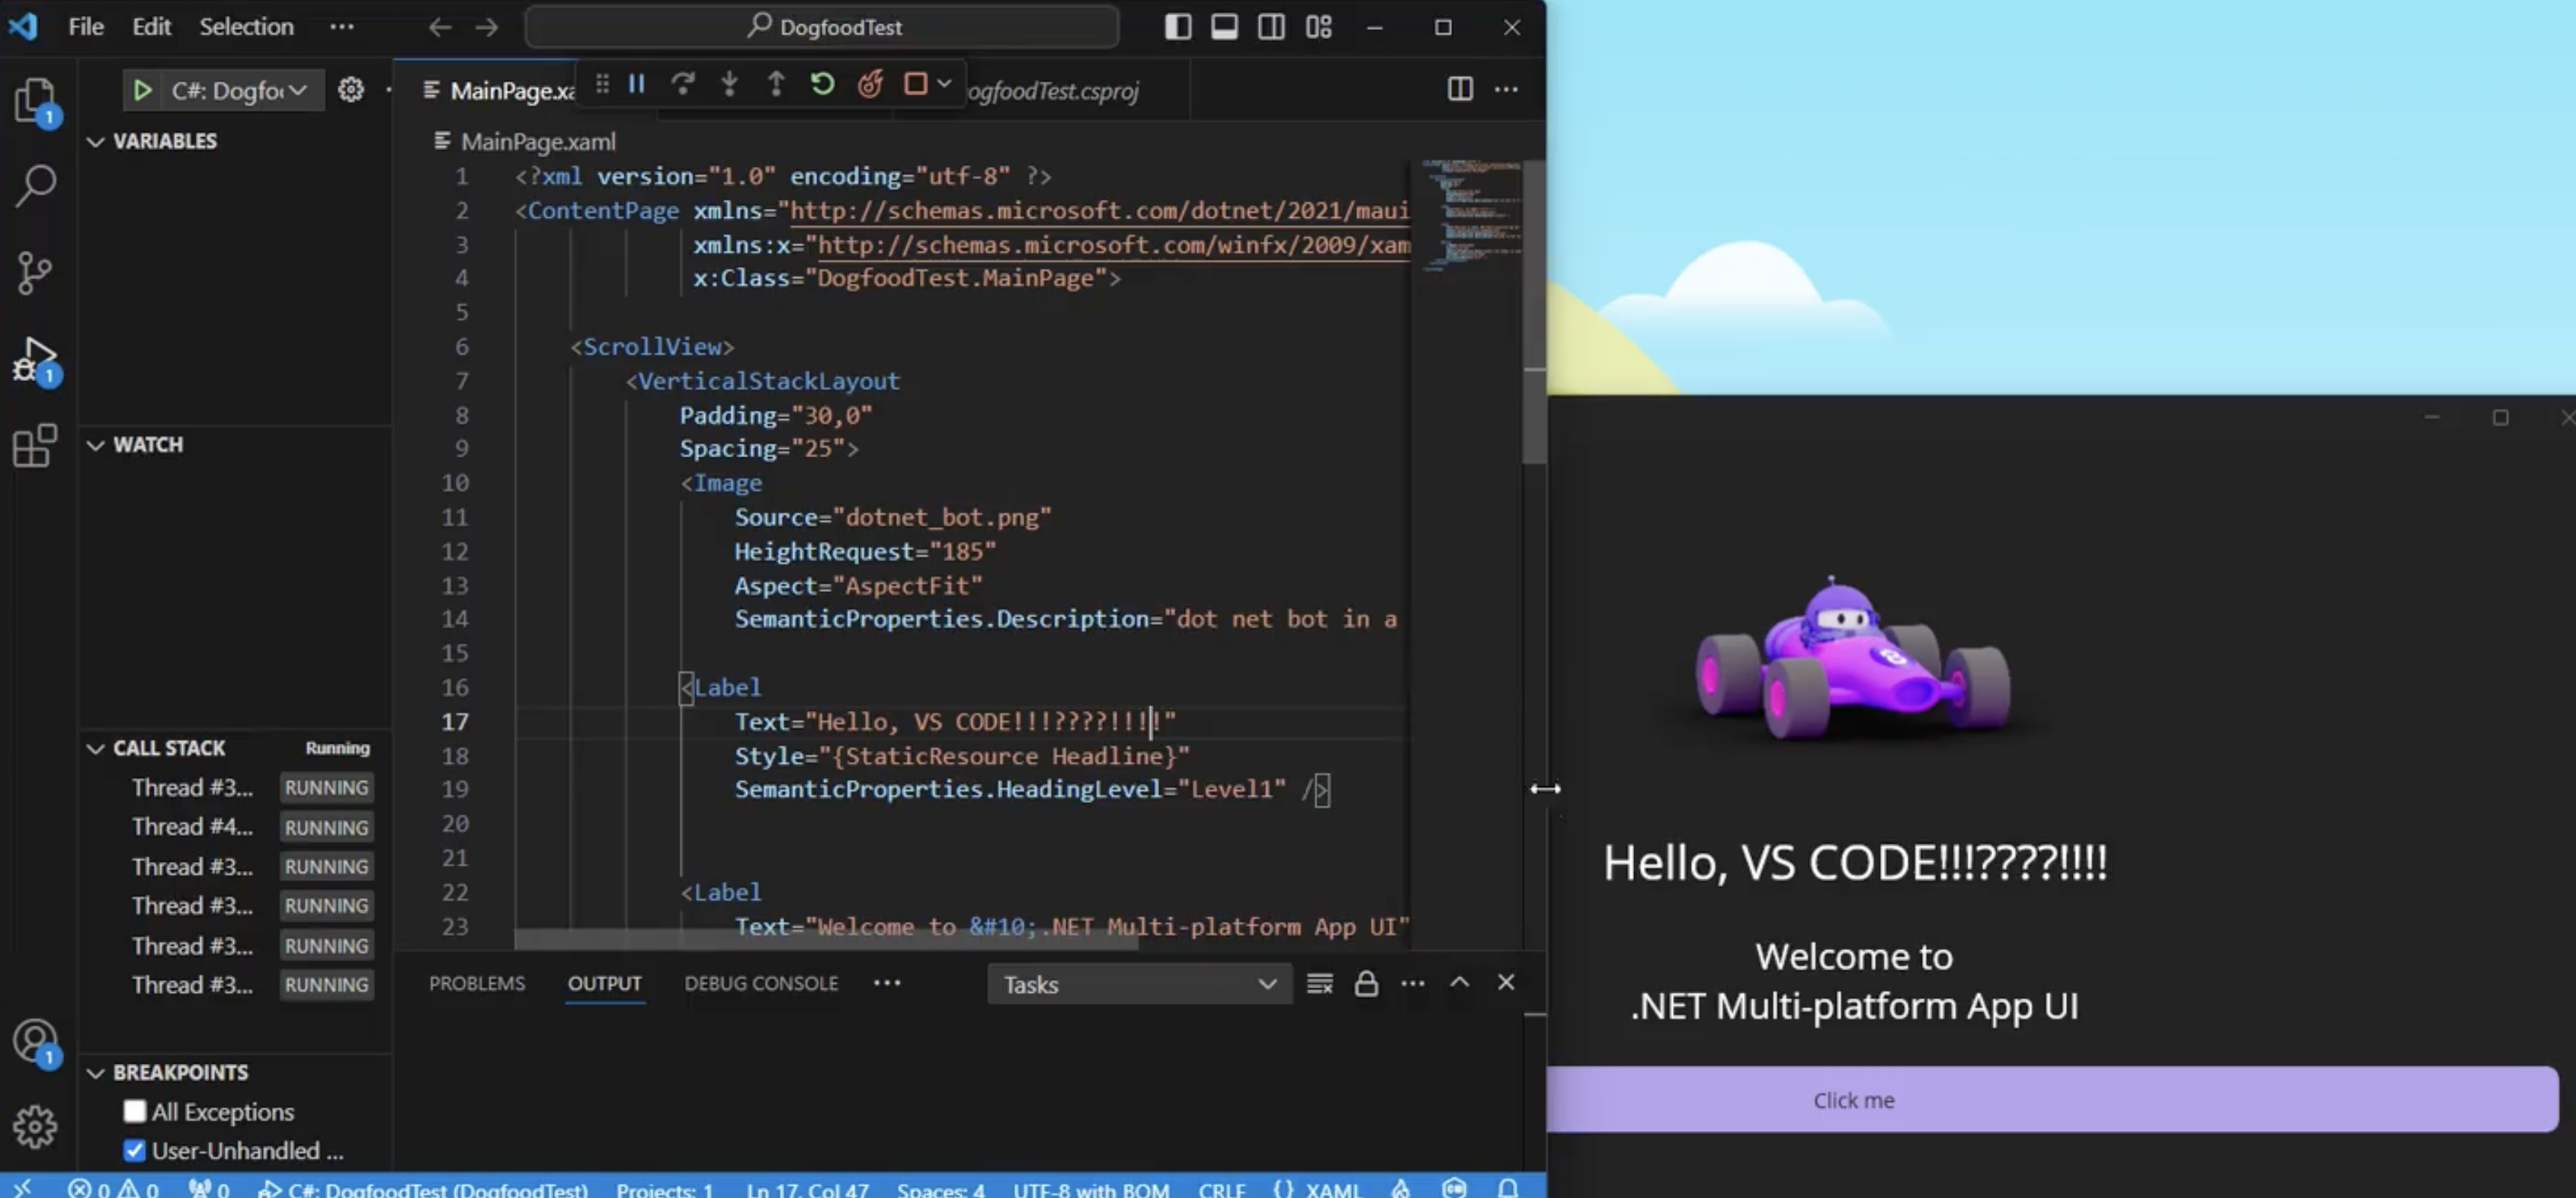 Hello VS Code?! Welcome to .NET Multi-platform App UI